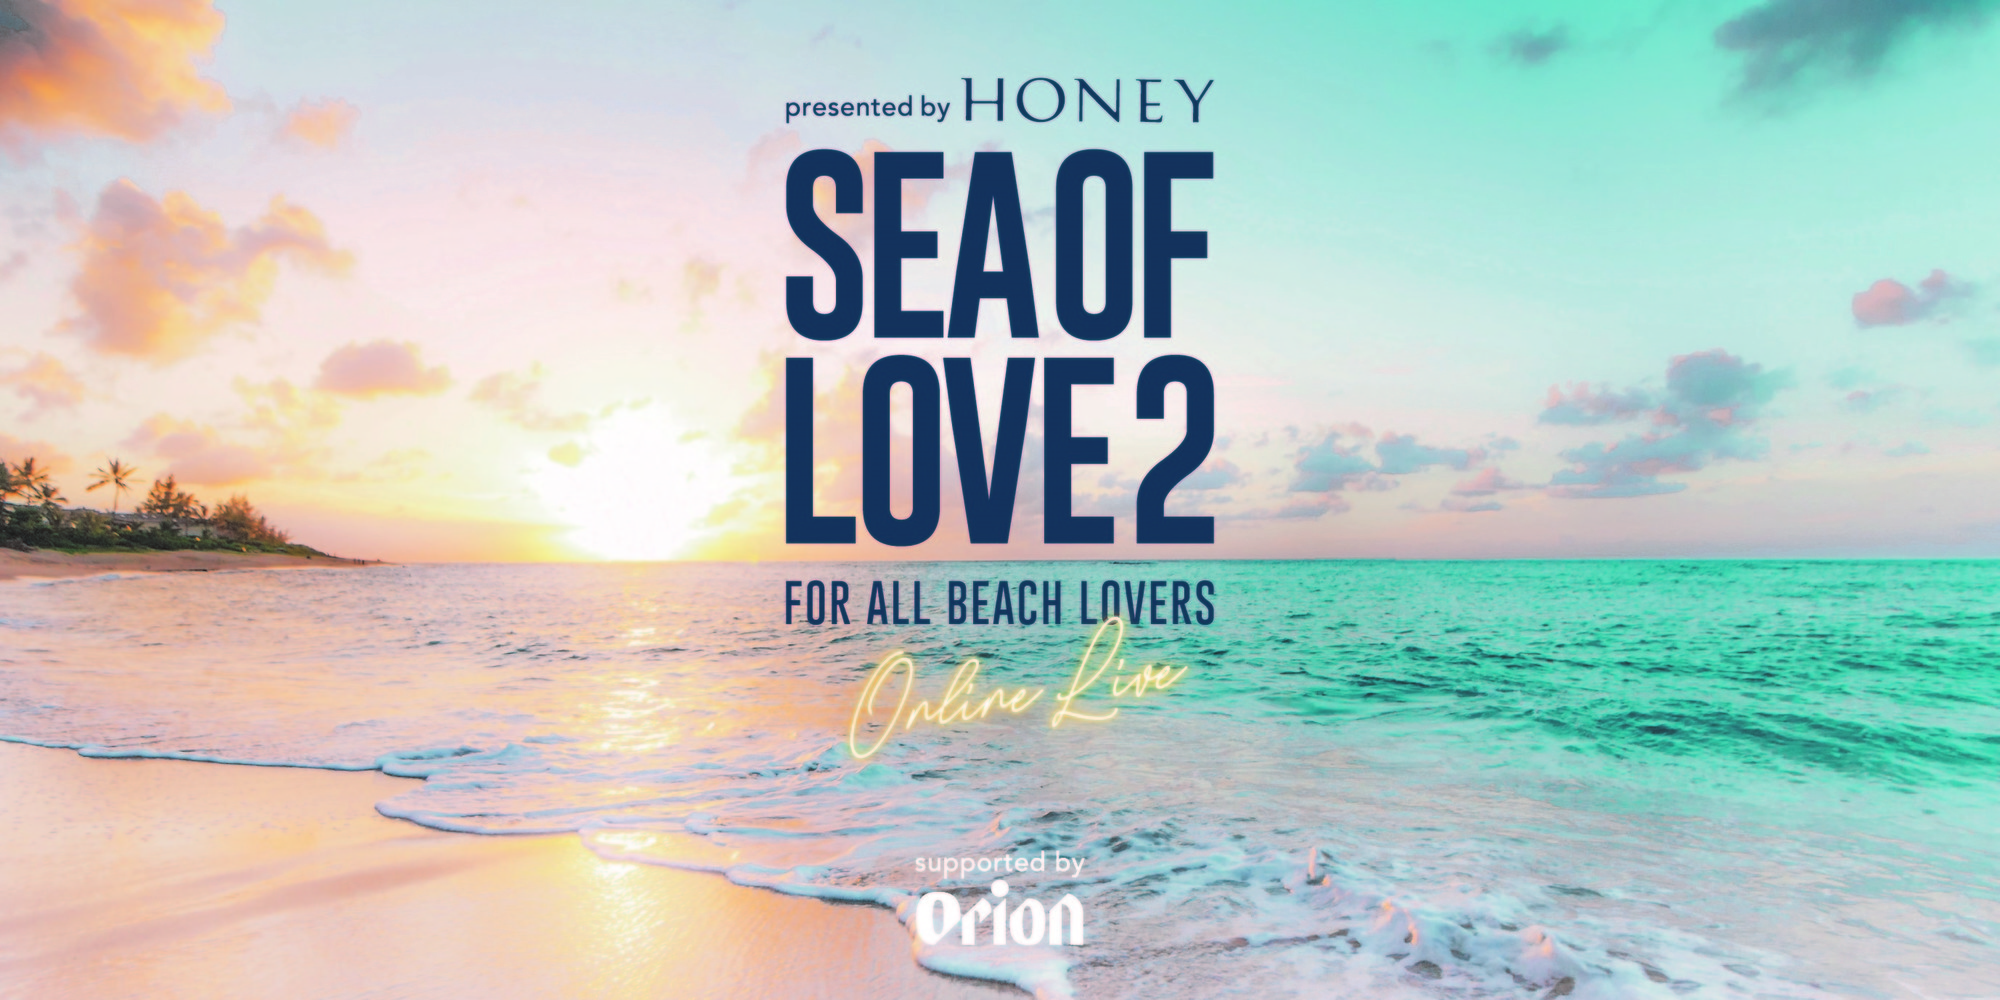 HONEY presents ONLINE LIVE “SEA OF LOVE 2”